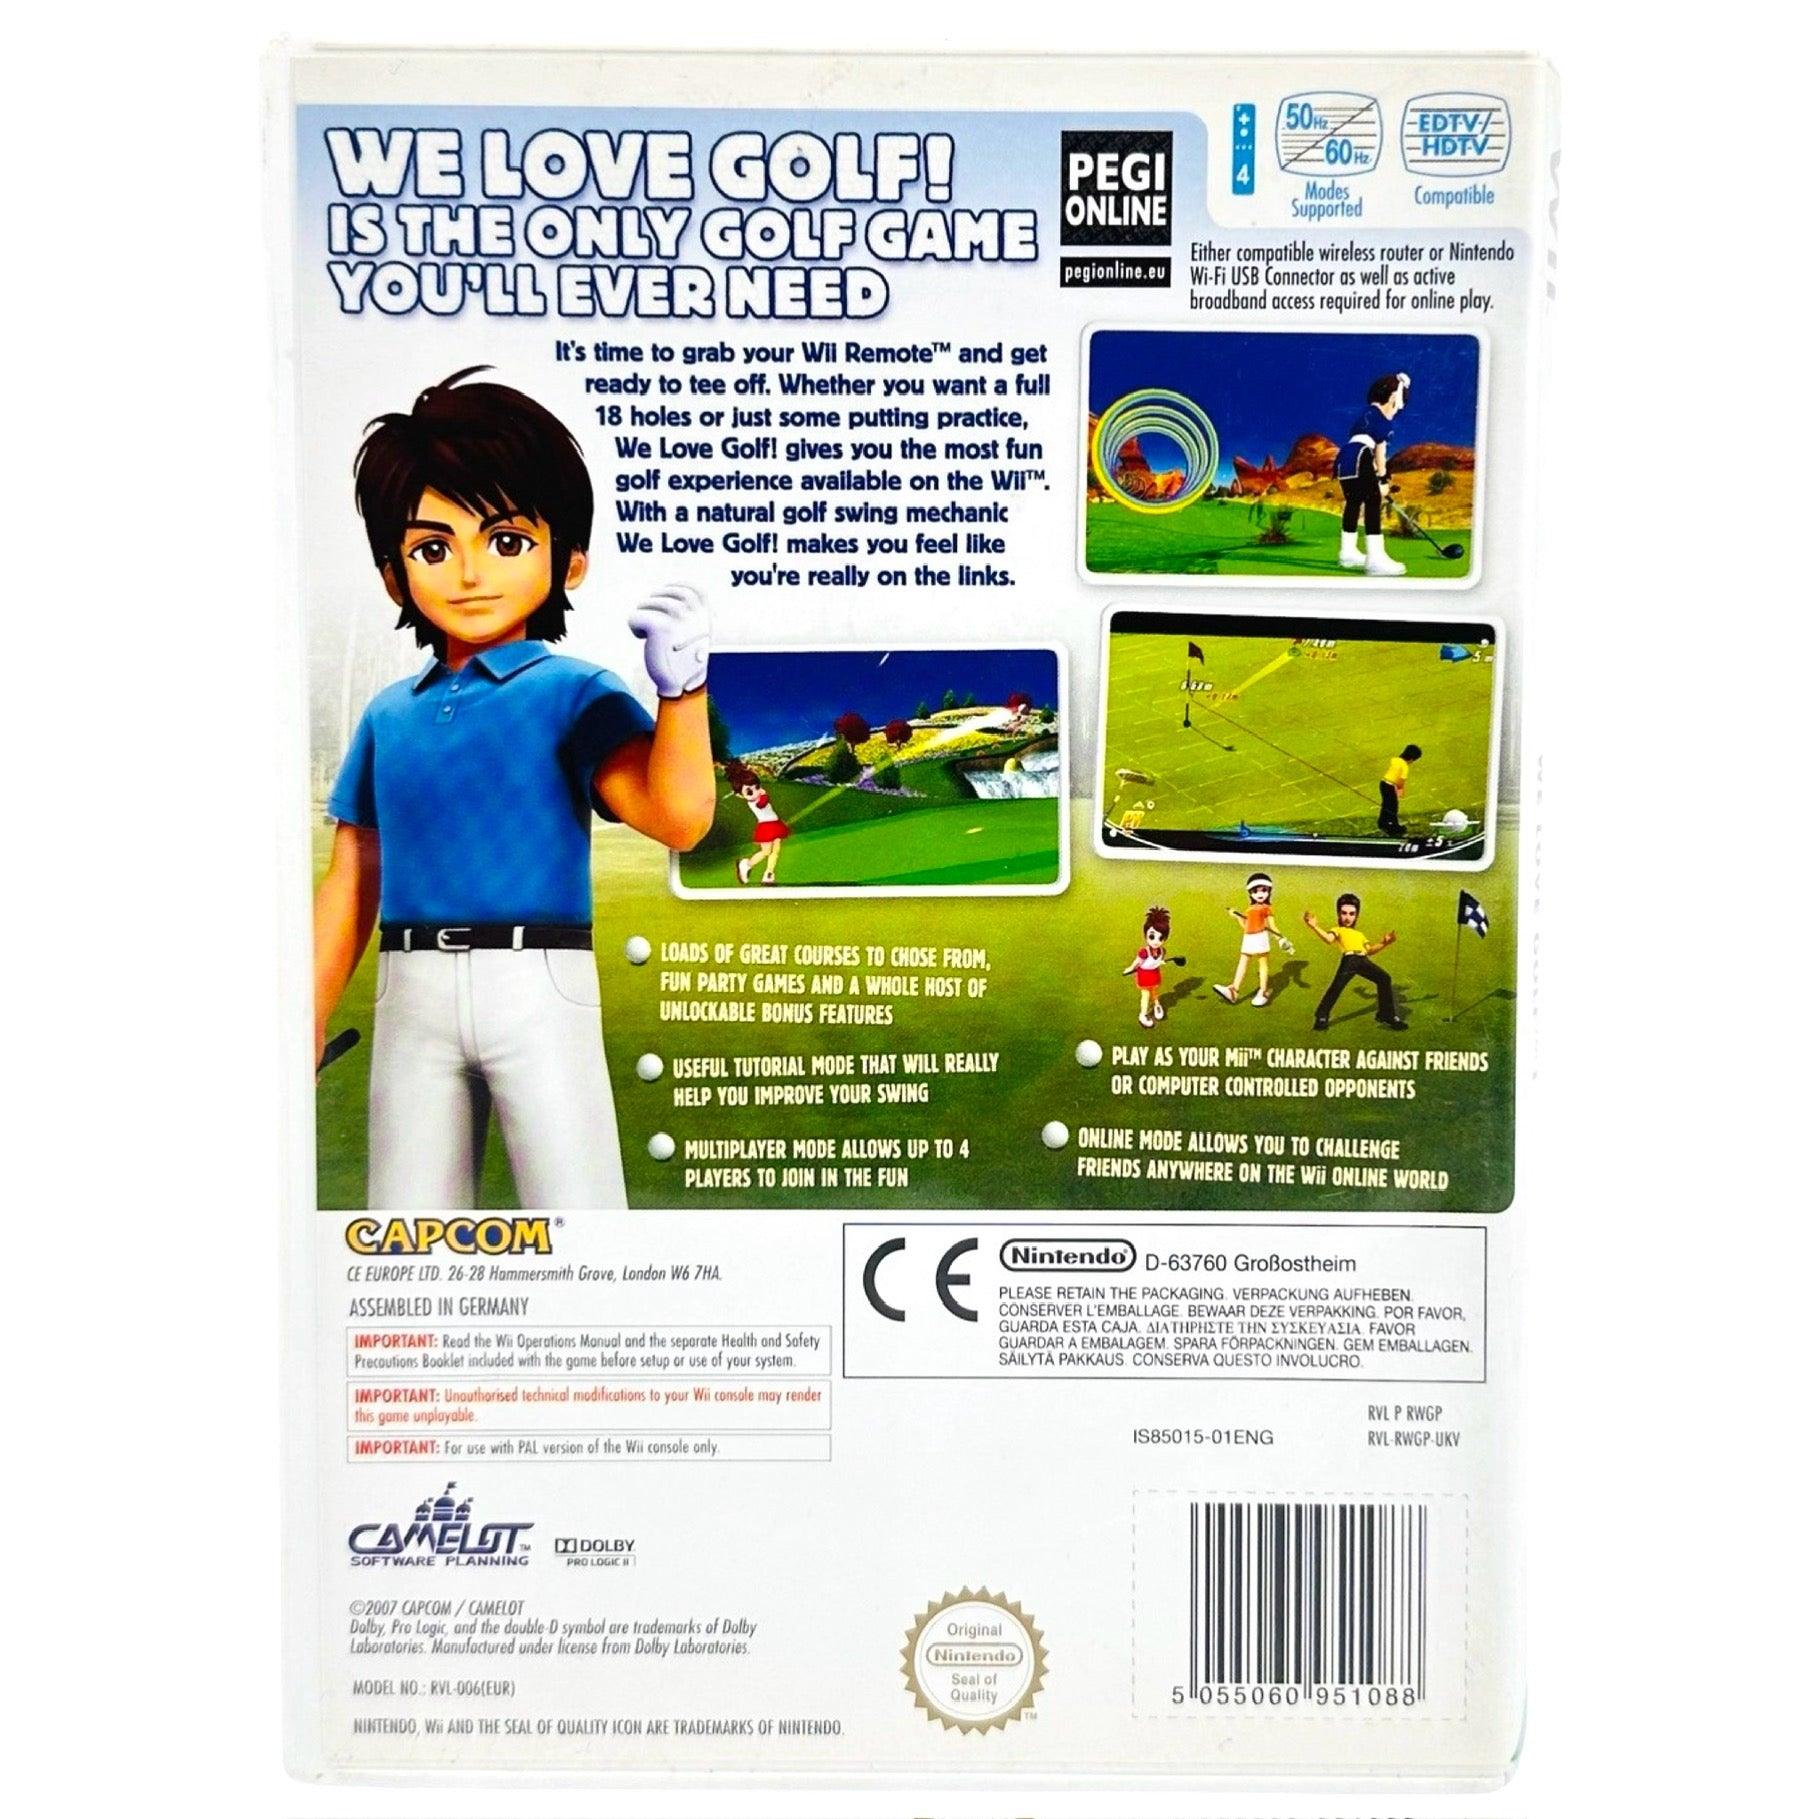 Wii: We Love Golf - RetroGaming.no